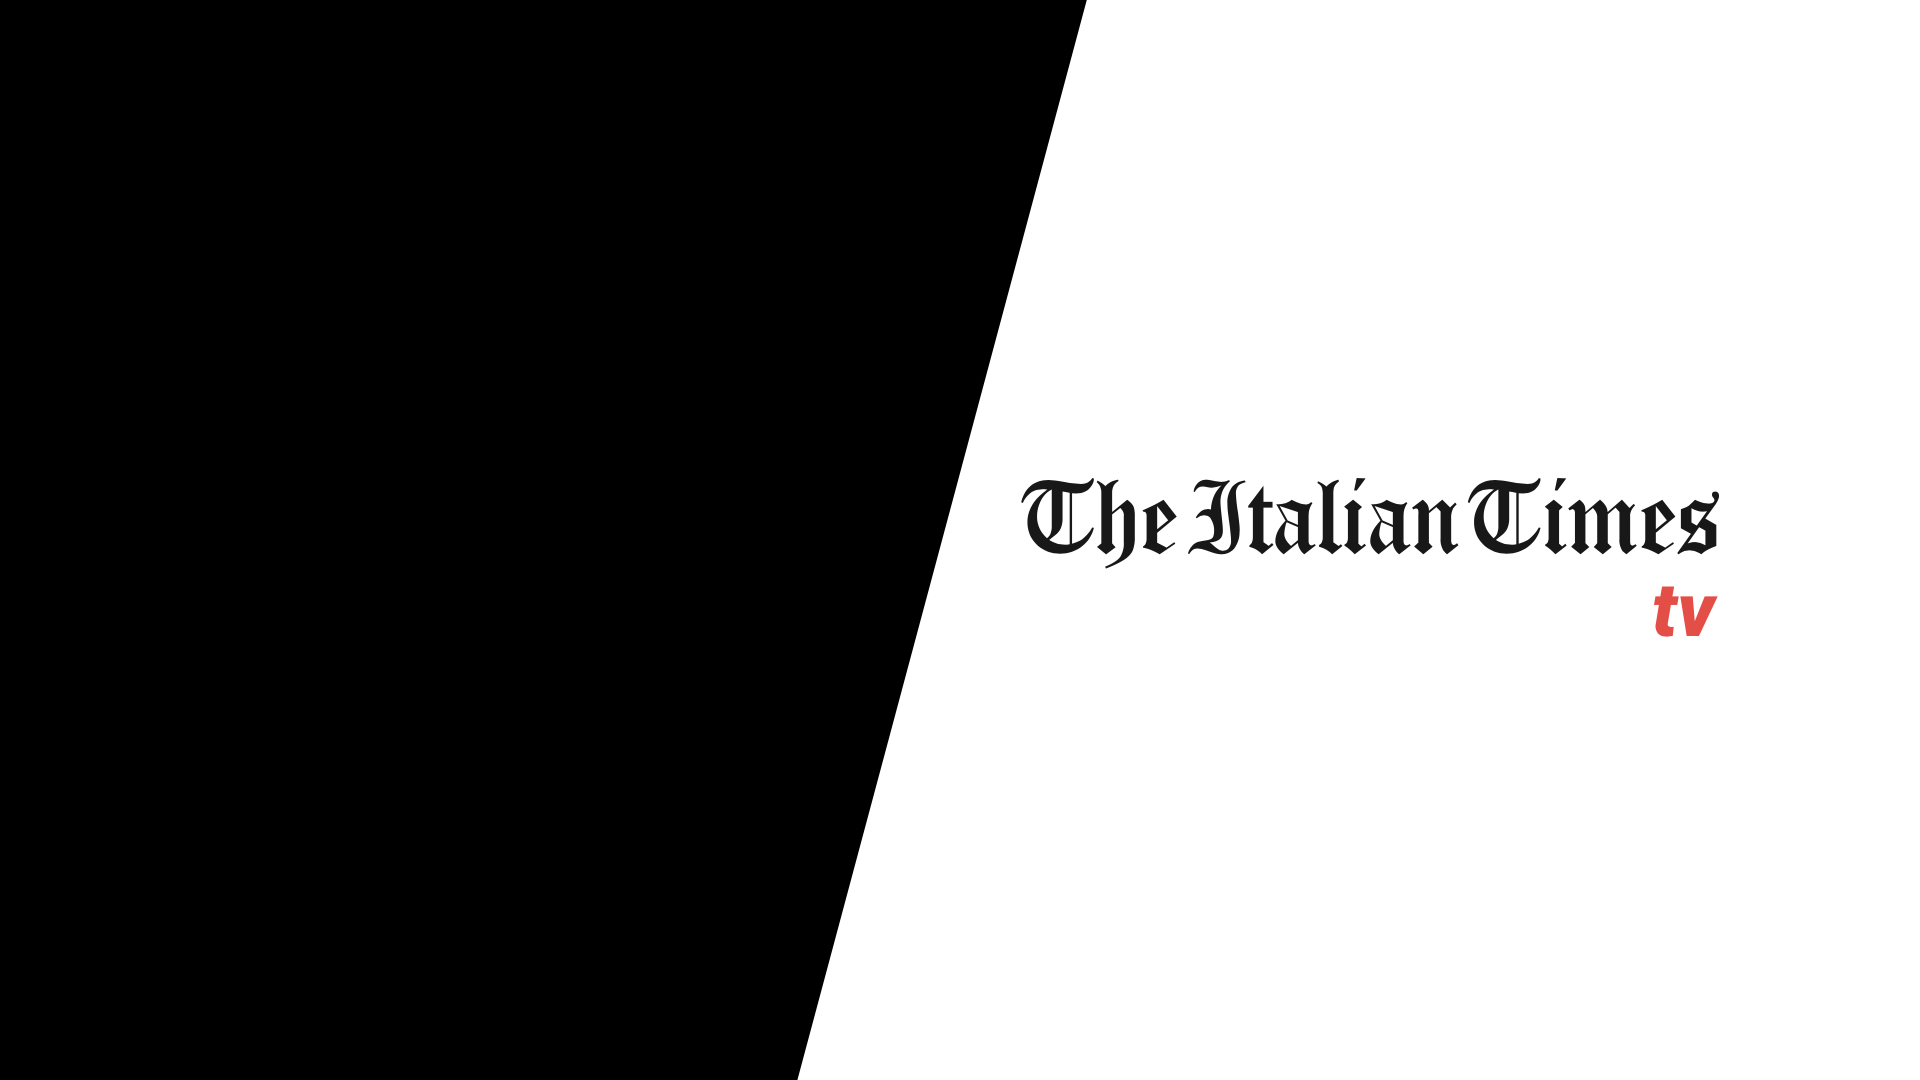 The Italian Times